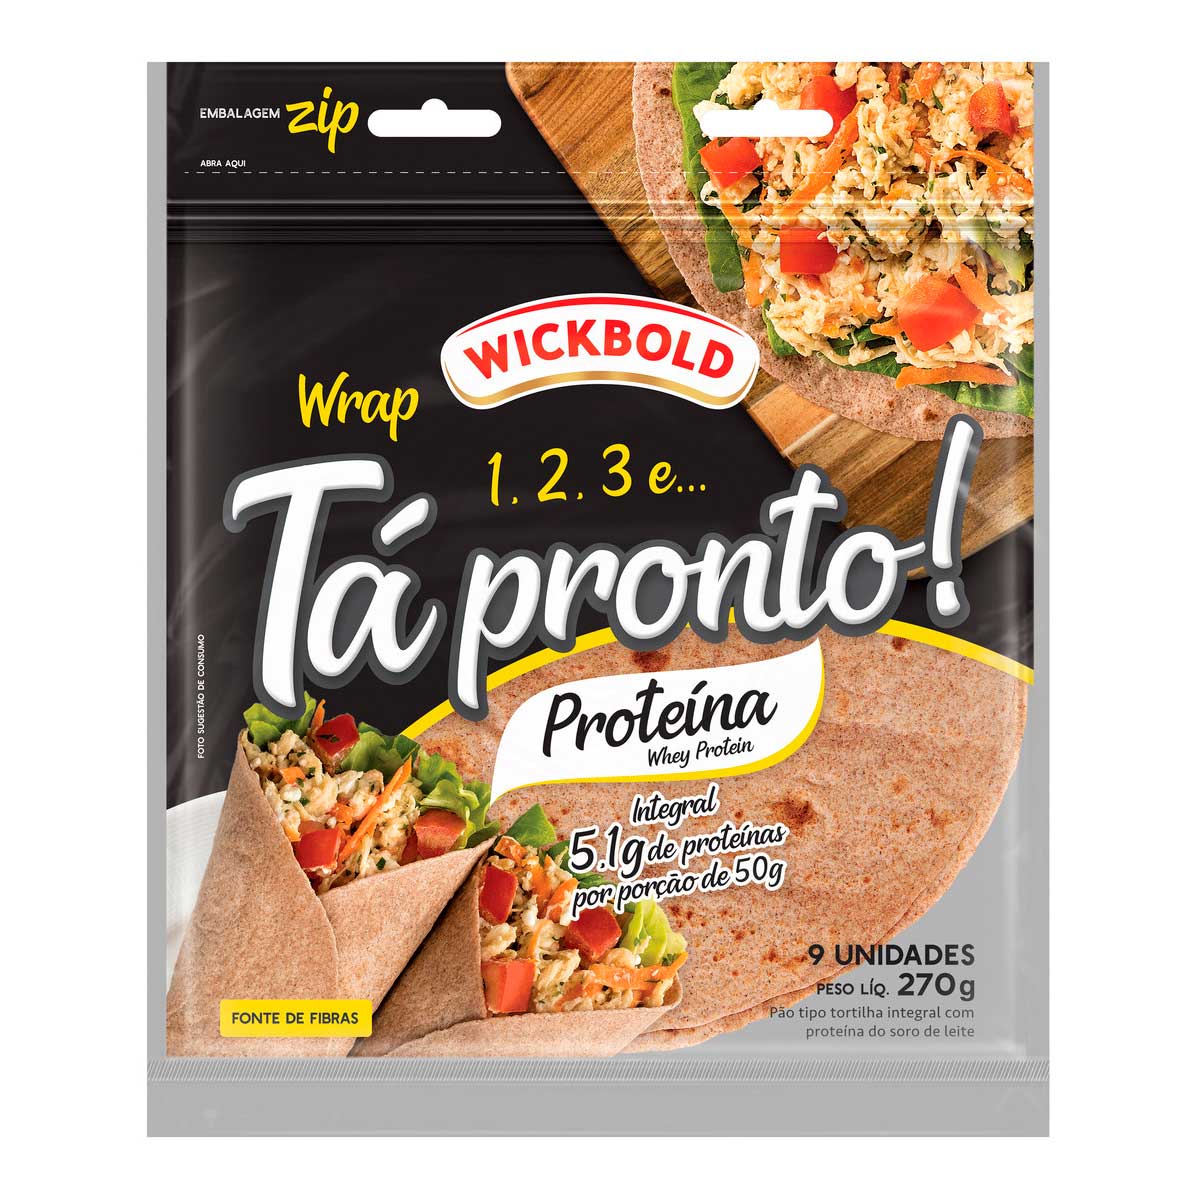 pao-tortilha-integral-wickbold-ta-pronto!-proteina-pouch-270-g-1.jpg